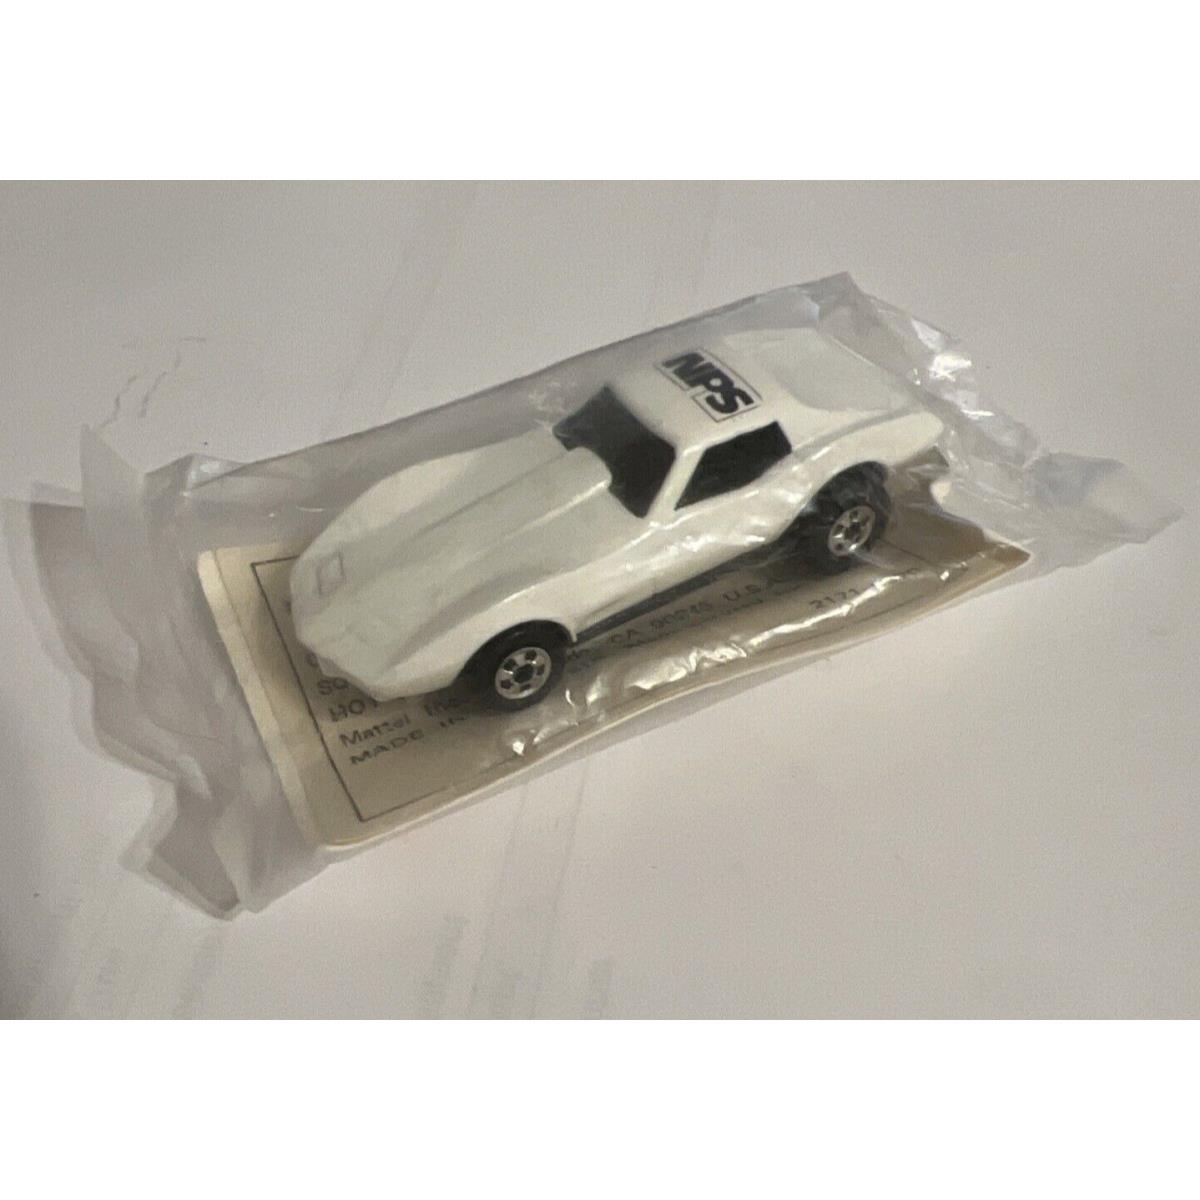 1991 Hot Wheels National Premiums Show Nps Promo Corvette Stingray White Baggie